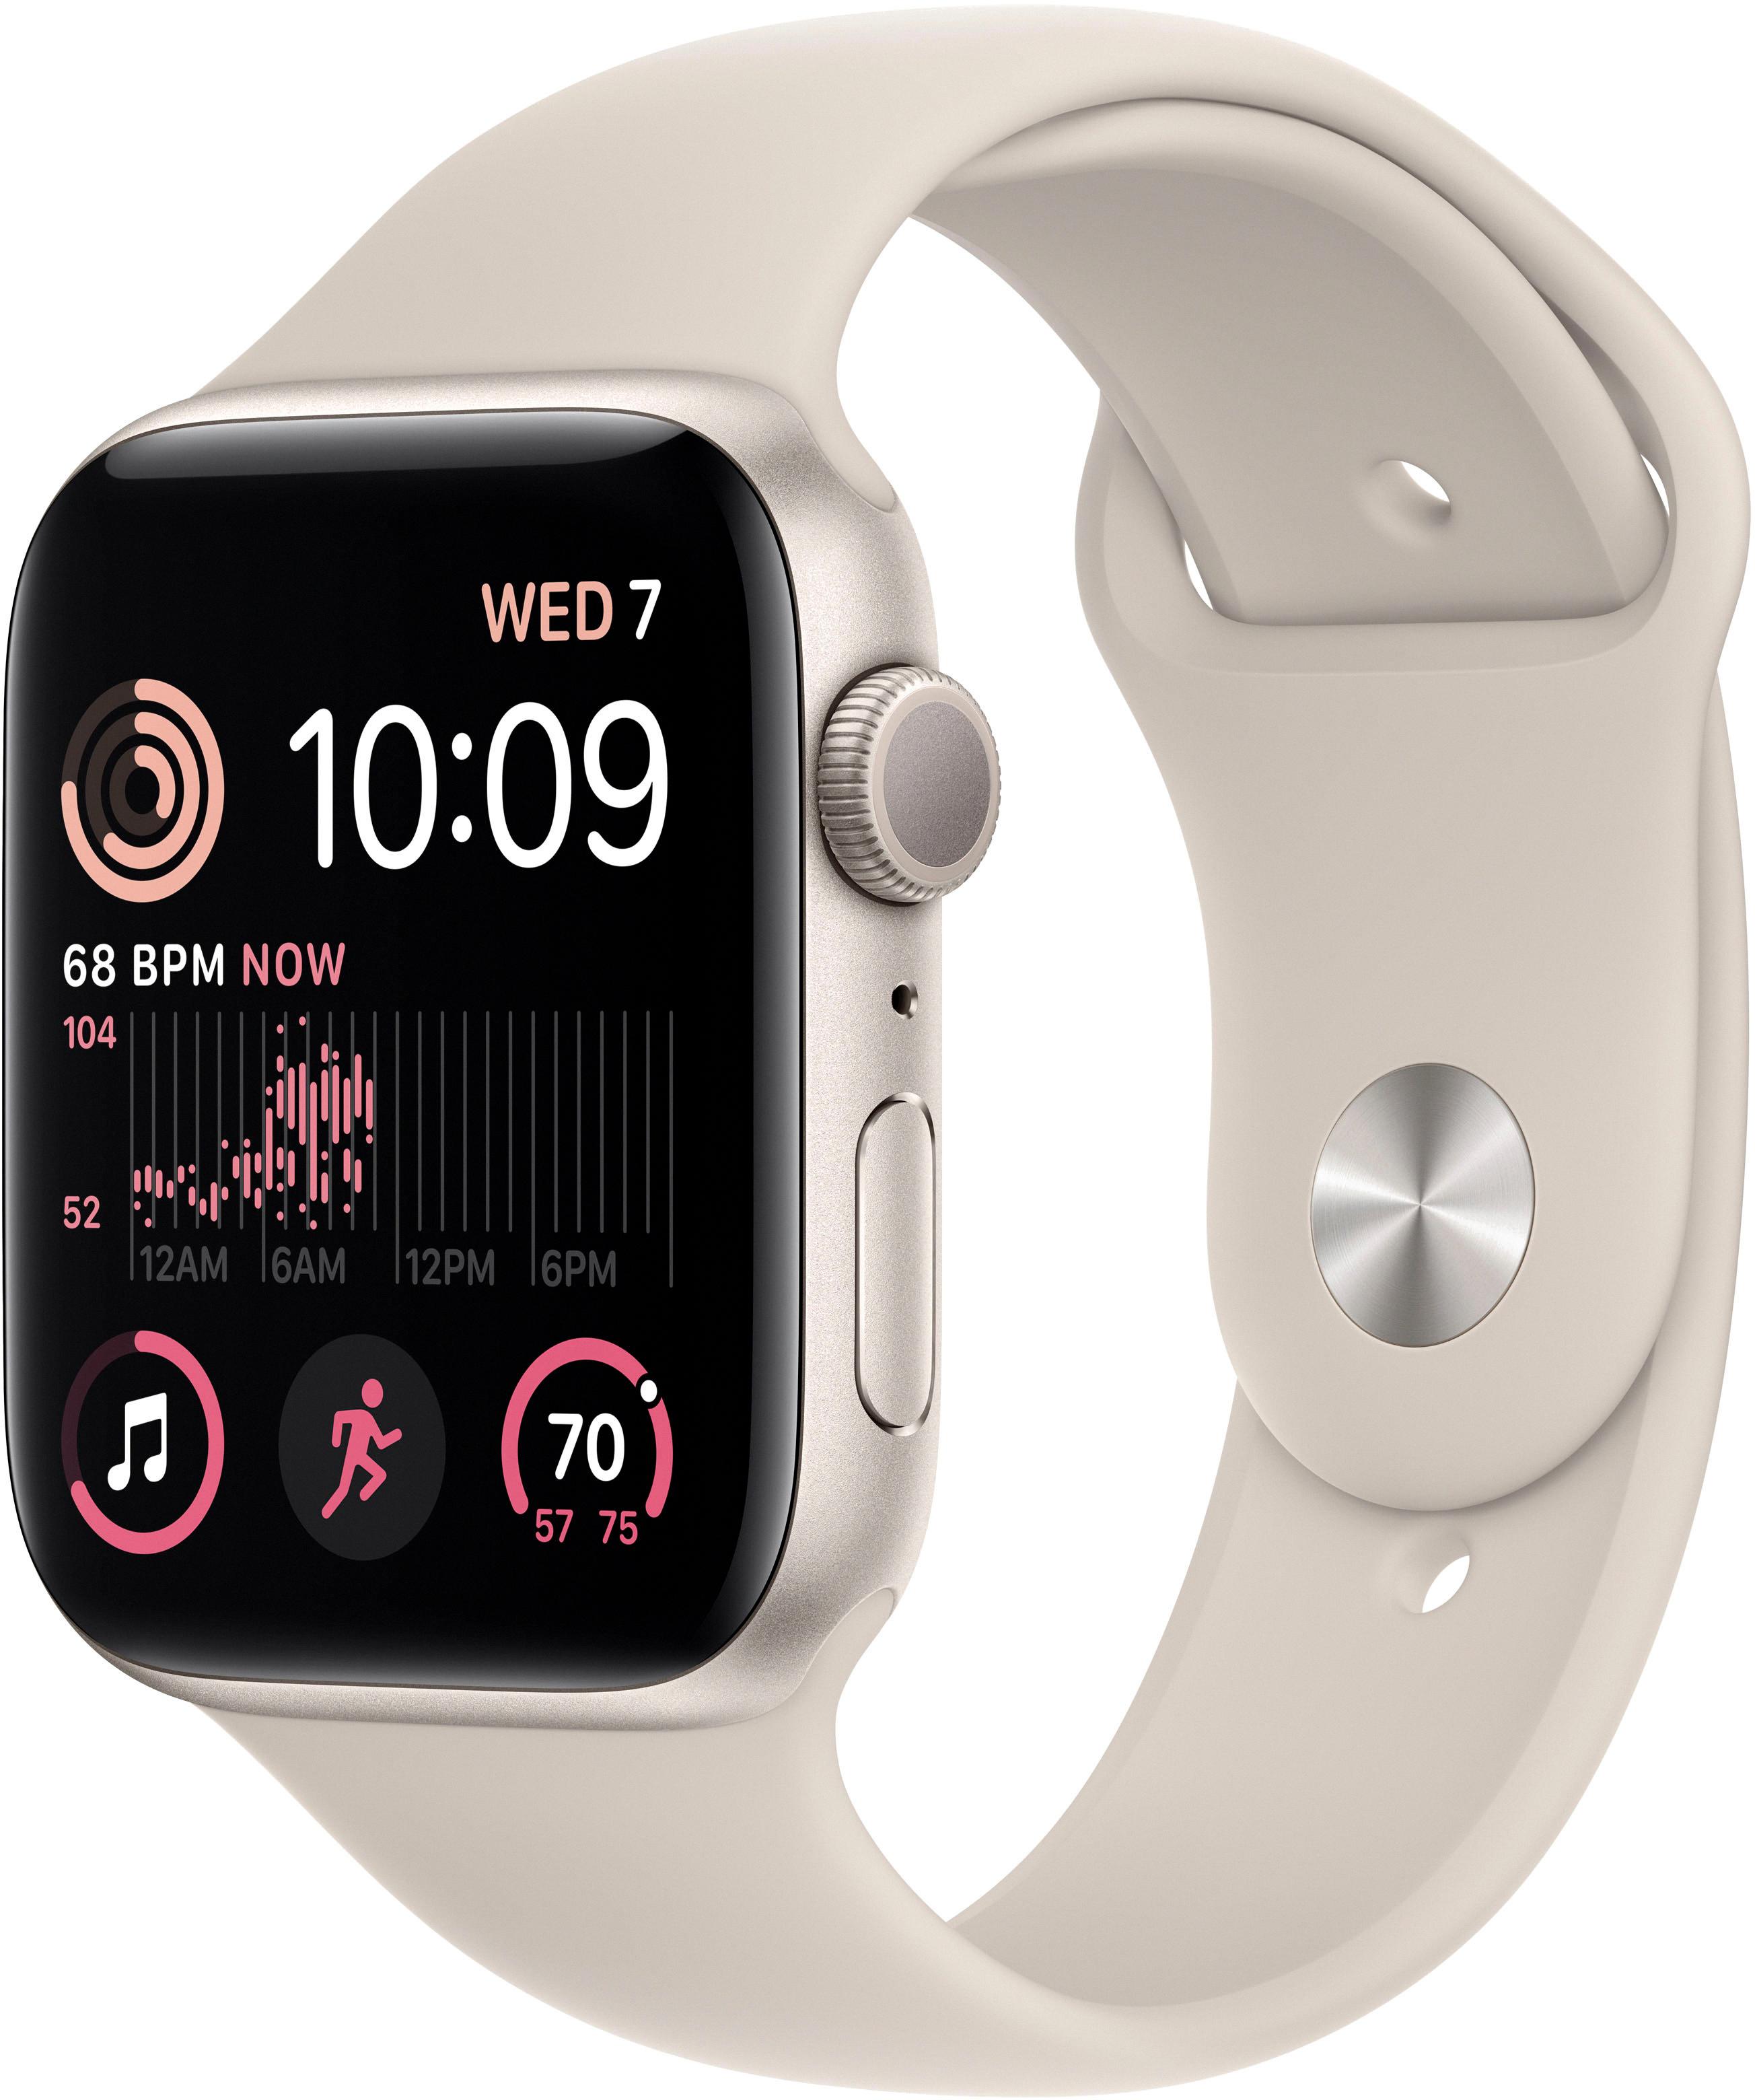 Apple Watch's Weekly Summary Notifications 9